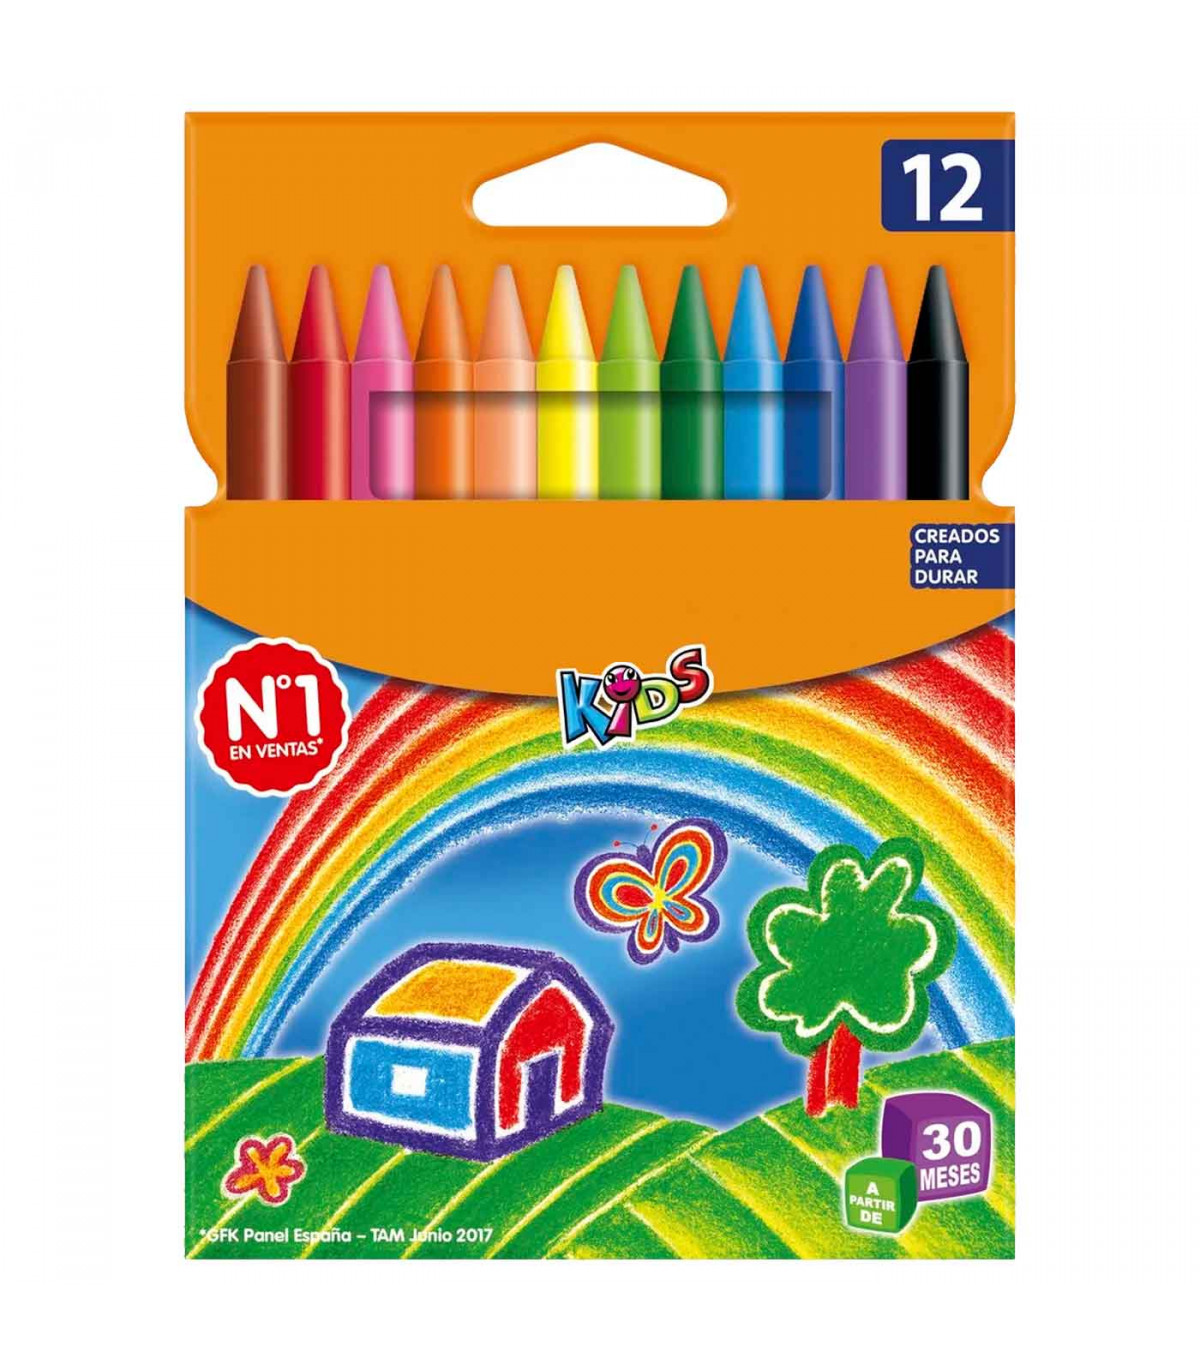 Tradineur - Caja de rotuladores de colores - 12 Colores llamativos